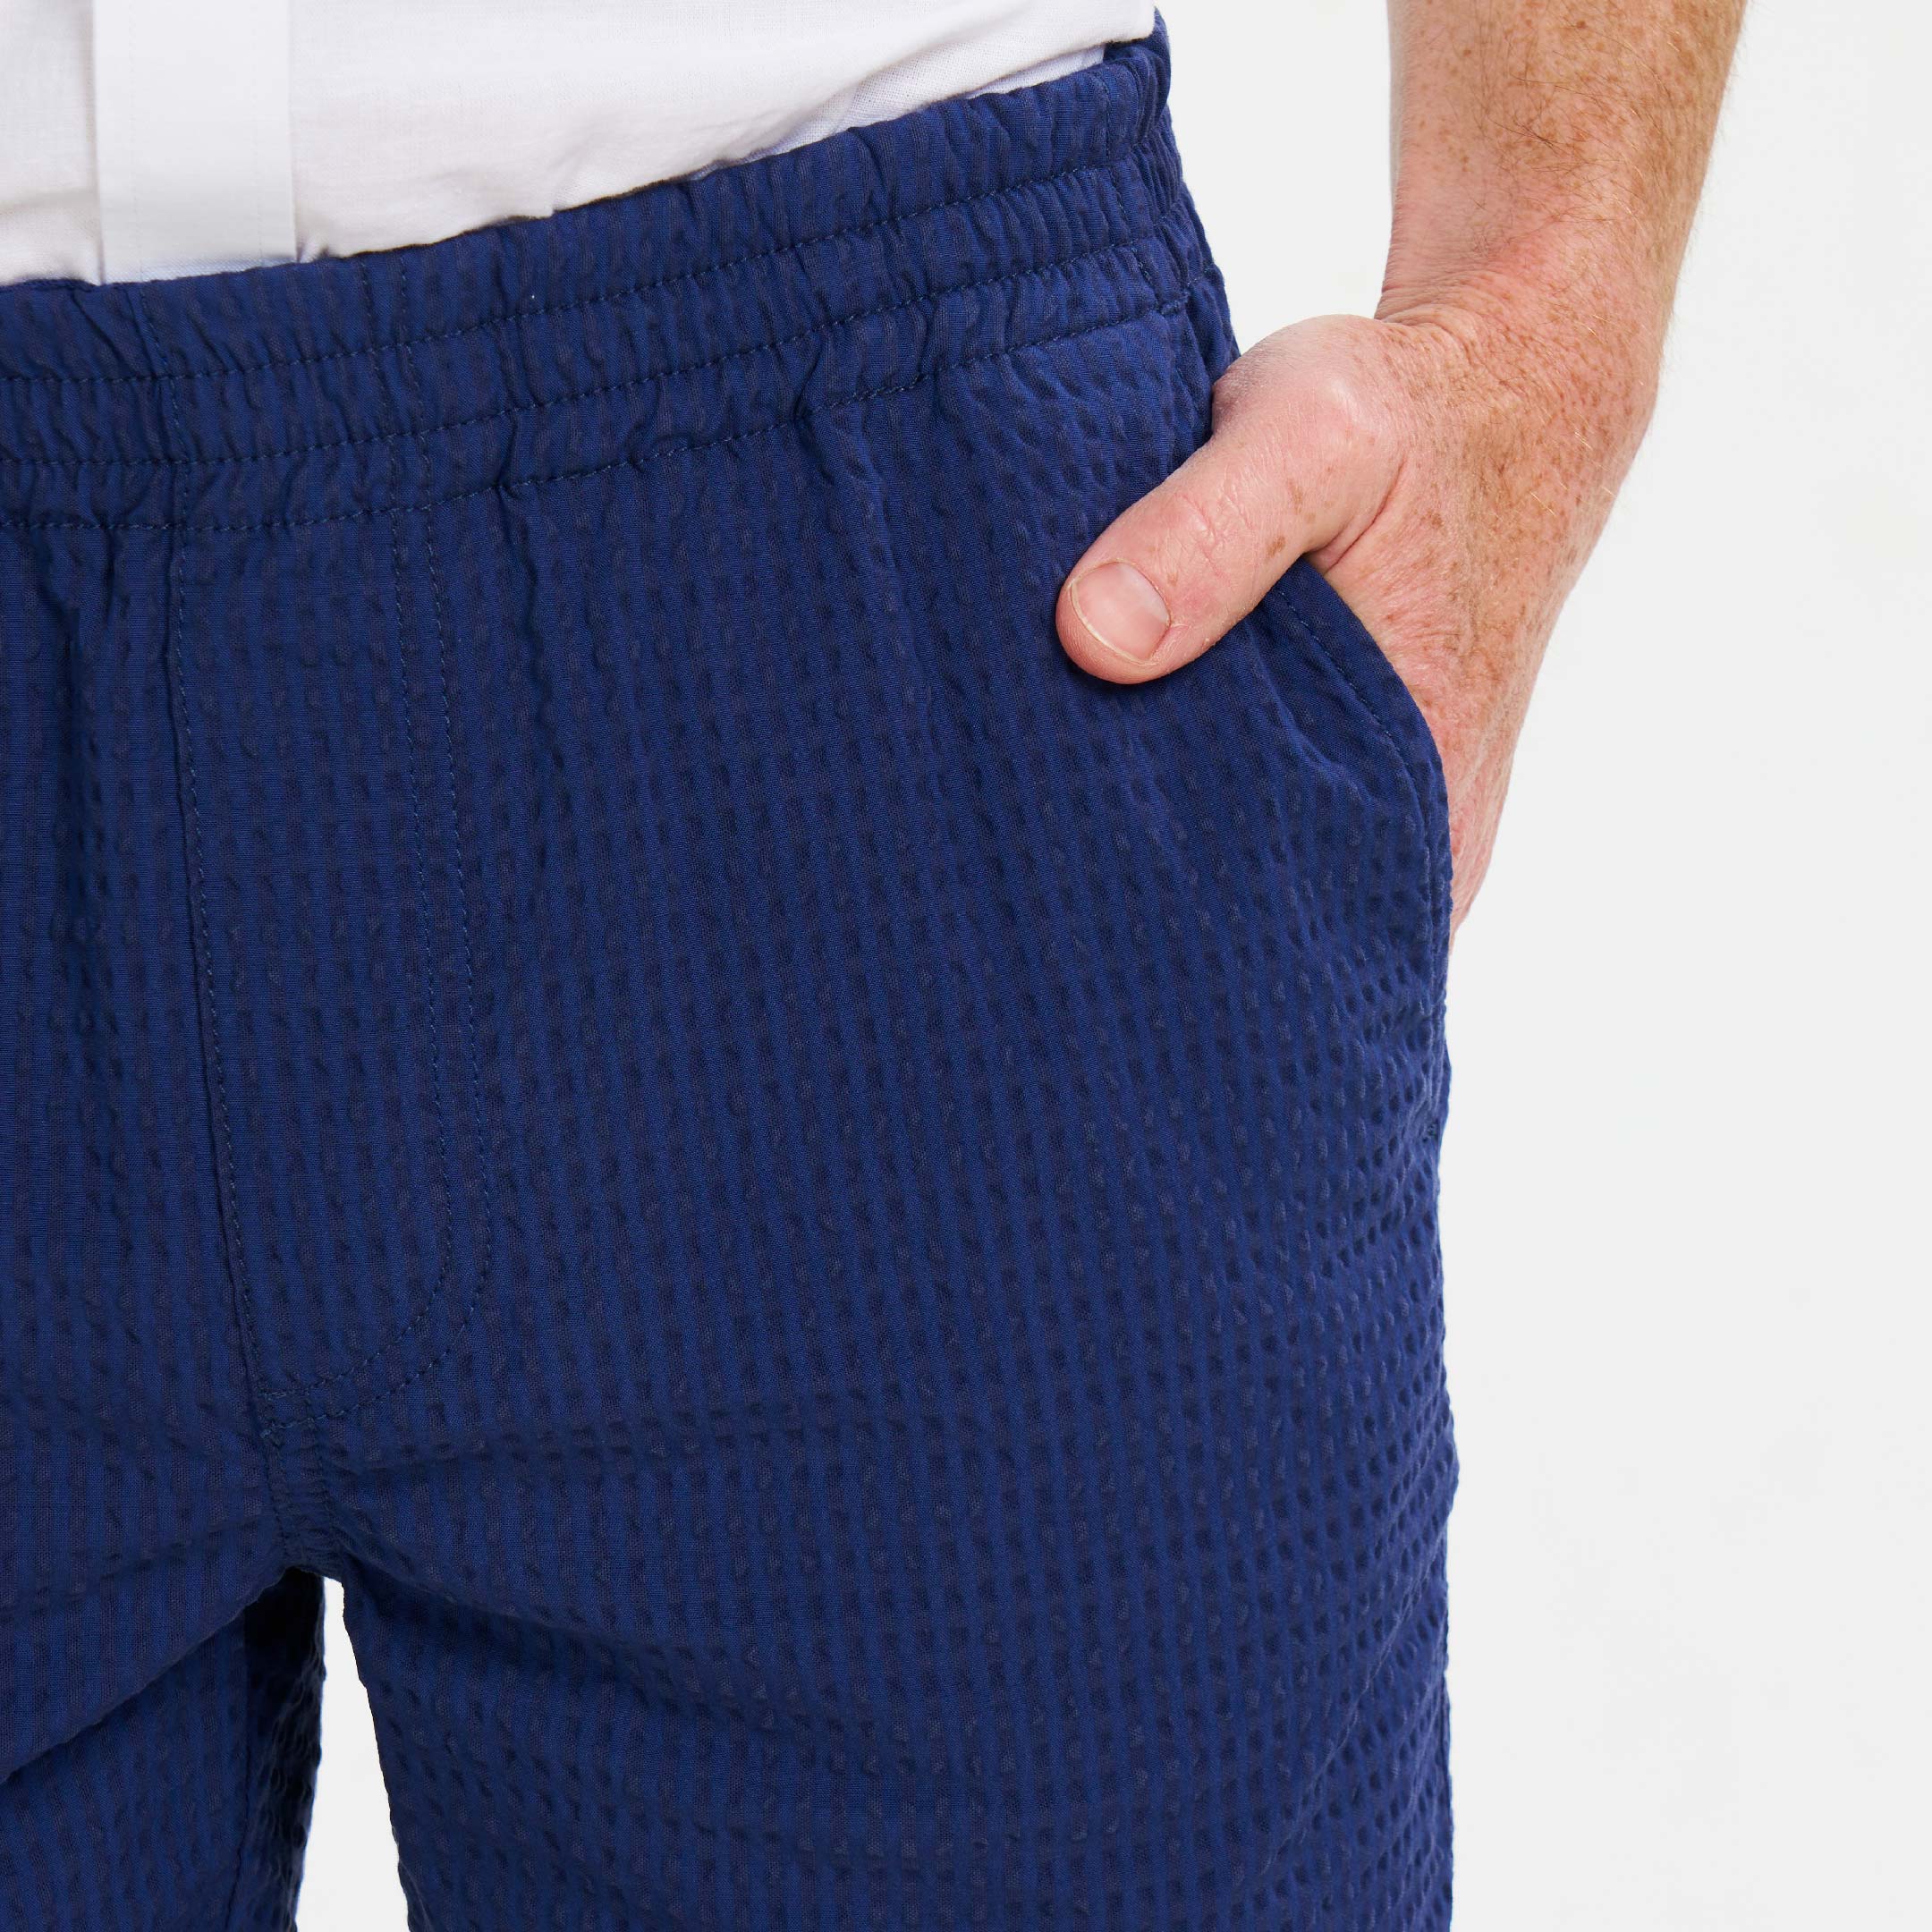 Ash & Erie Blue Seersucker Deck Shorts for Short Men   Walking Shorts